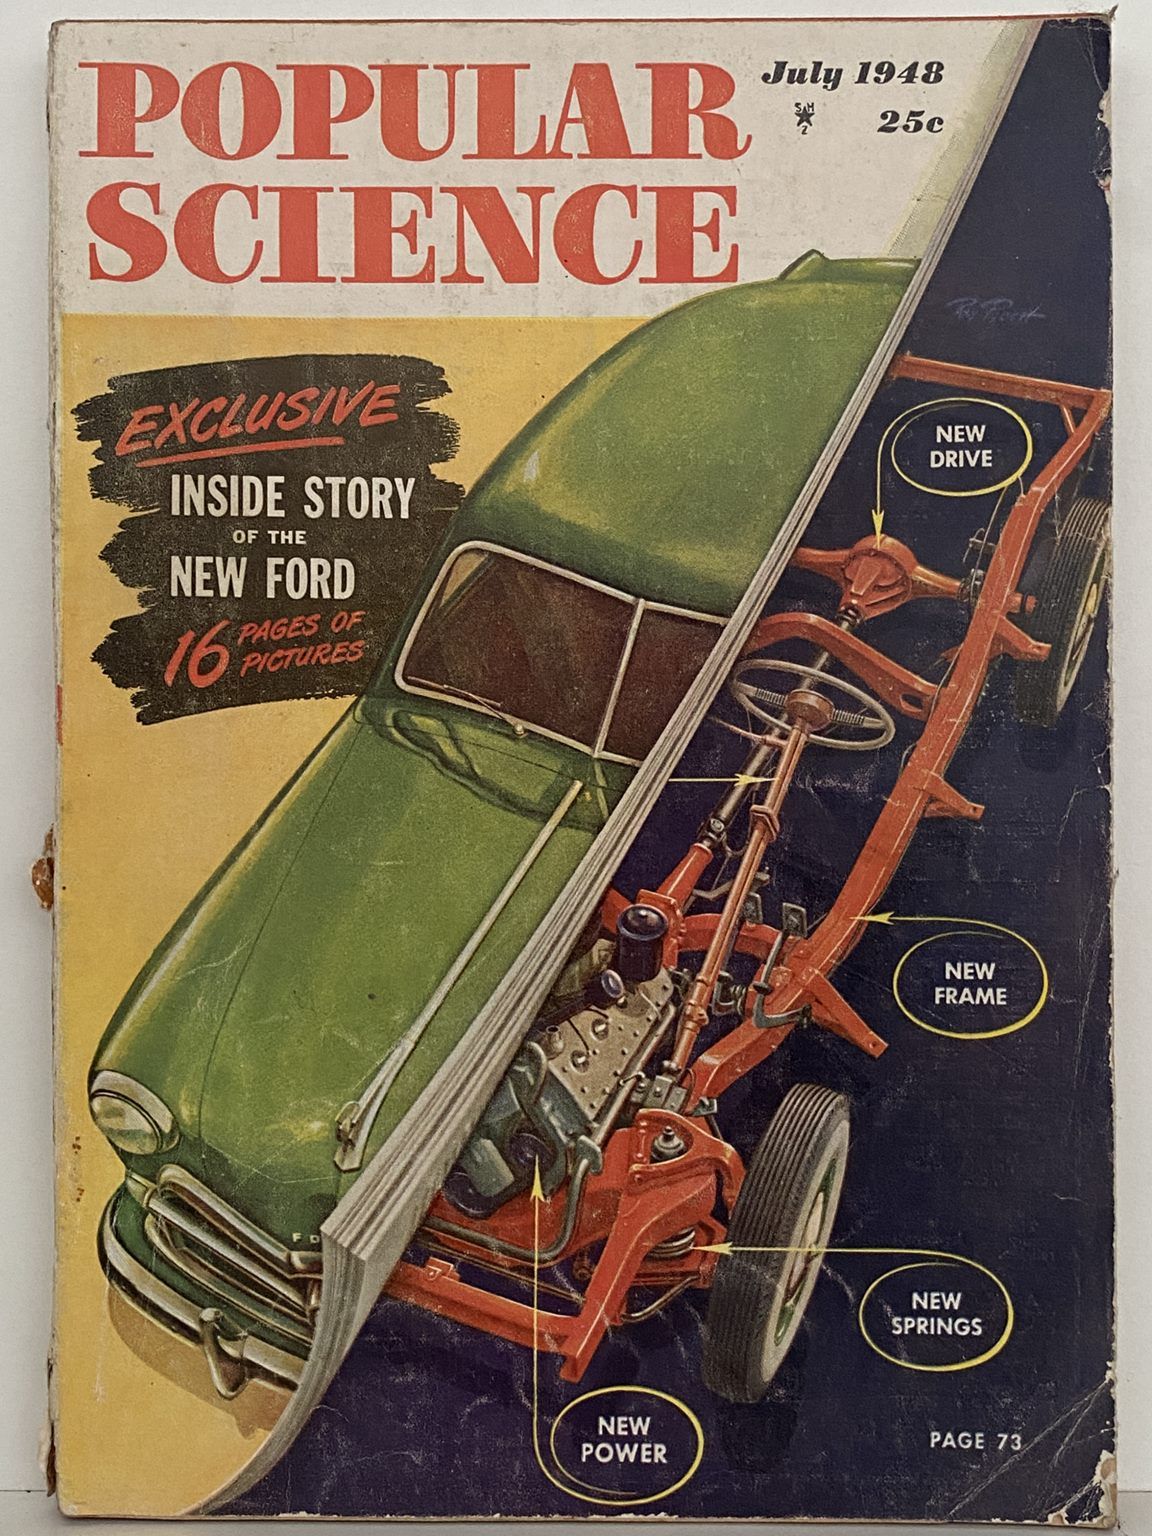 VINTAGE MAGAZINE: Popular Science, Vol. 153, No. 1 - July 1948